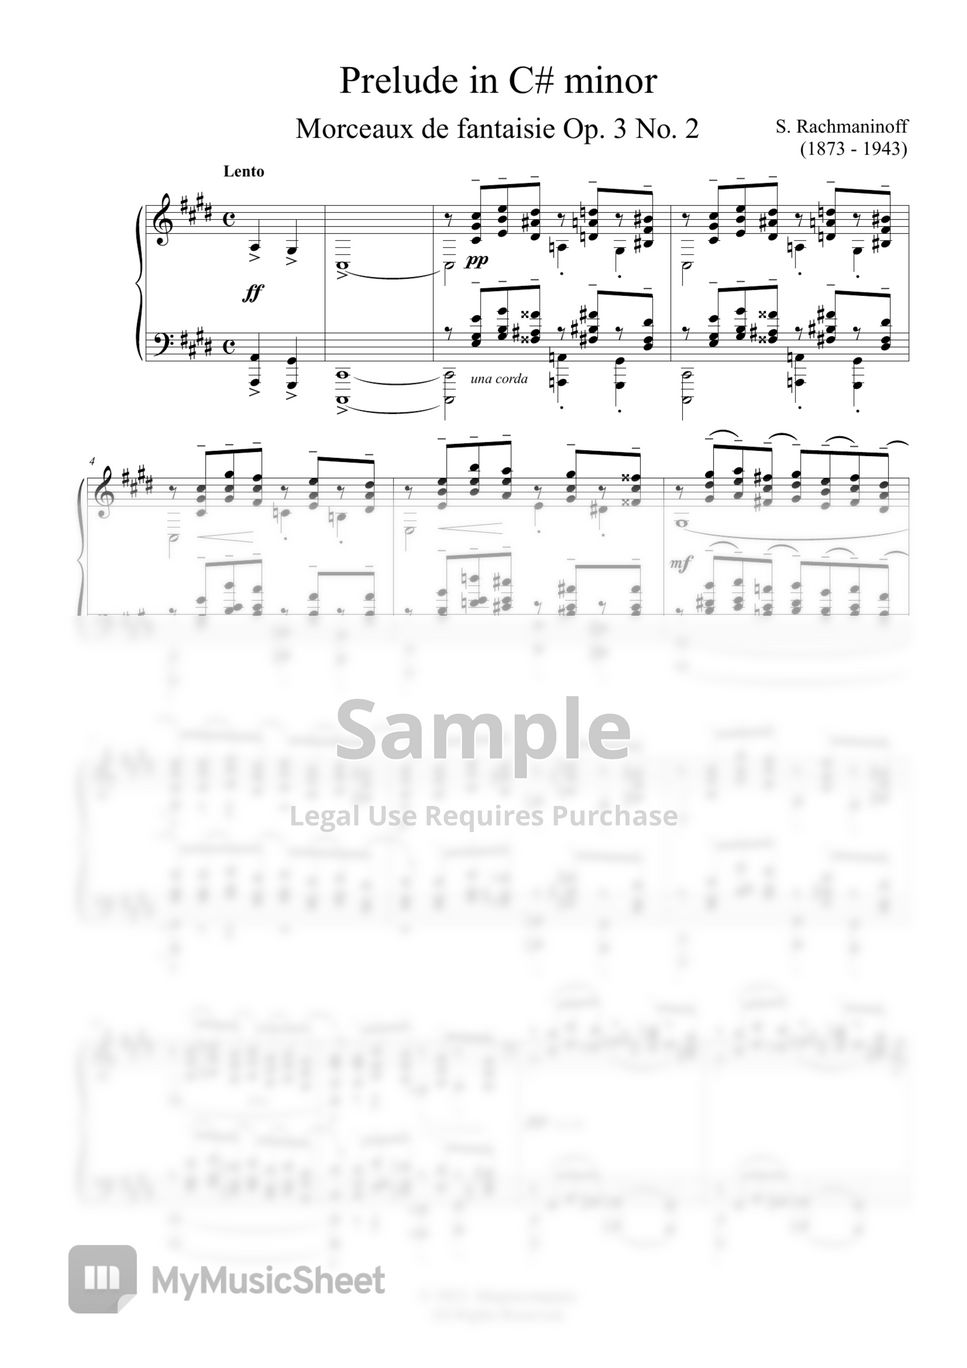 S. Rachmaninoff - Prelude in C sharp minor (Op.3, No.2)